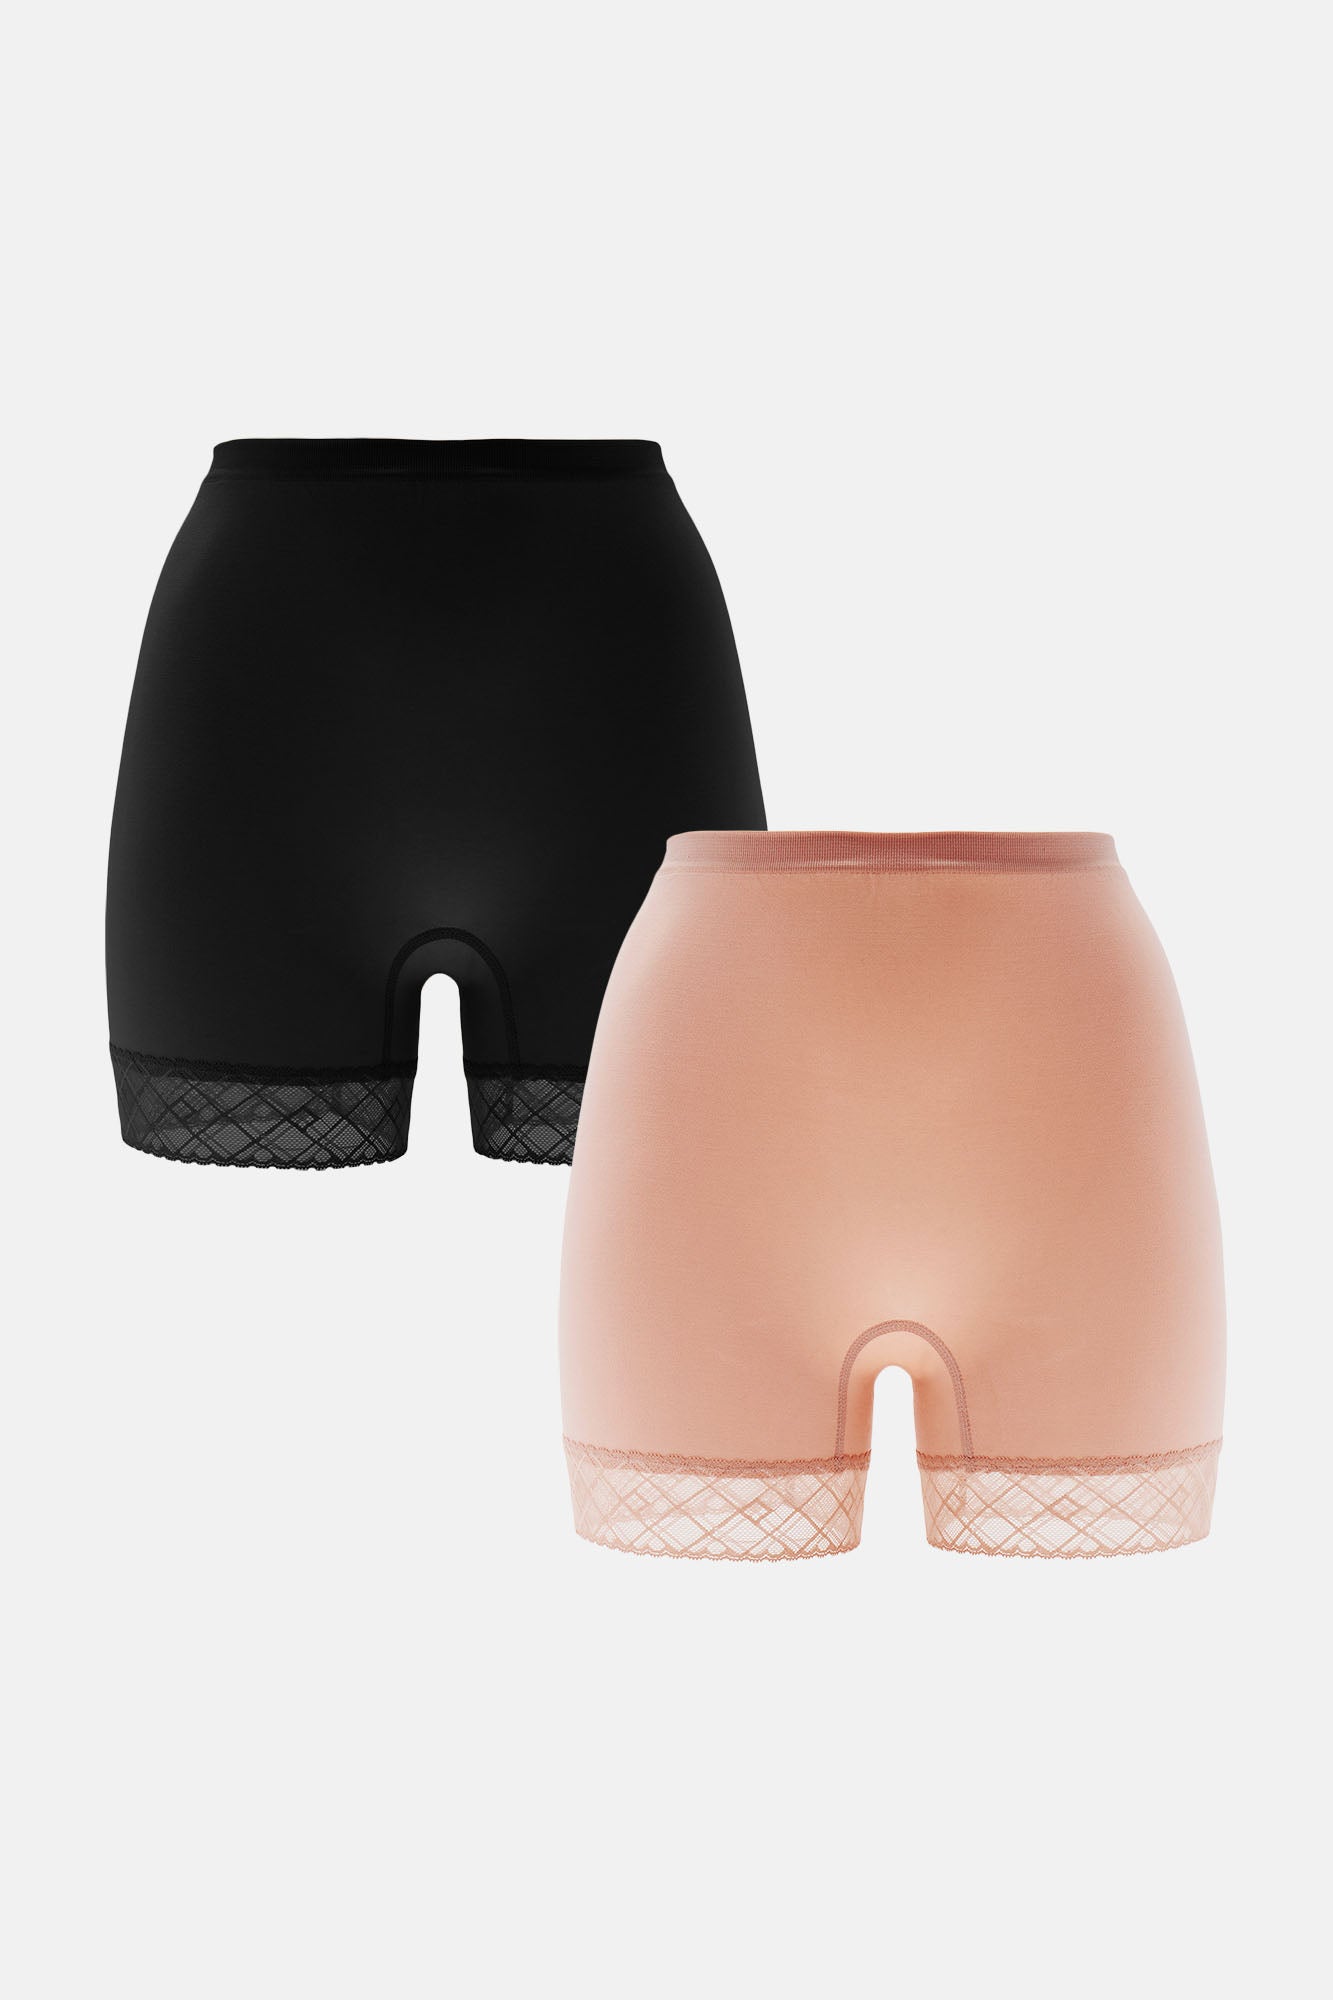 More Curves Smoothing Shapewear Shorts 2 Pack - Mocha/combo, Fashion Nova,  Lingerie & Sleepwear